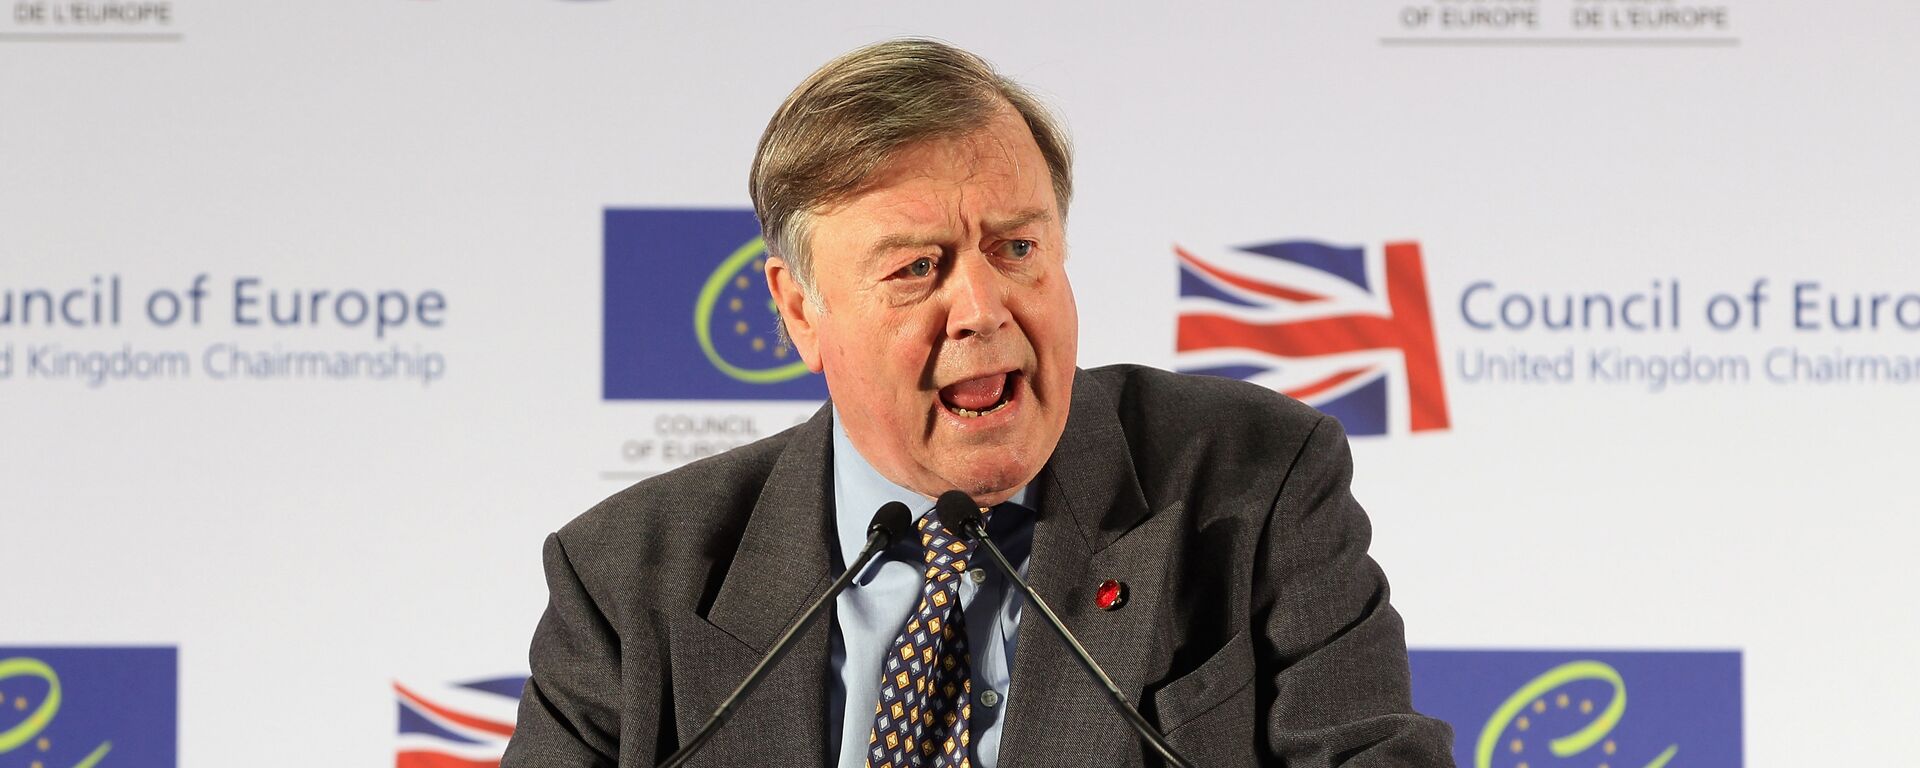 Britain's Former Chancellor Ken Clarke speaks during a news conference at the Council of Europe Conference at the Brighton Centre, Brighton, East Sussex, on April 19, 2012. - Sputnik International, 1920, 02.03.2021